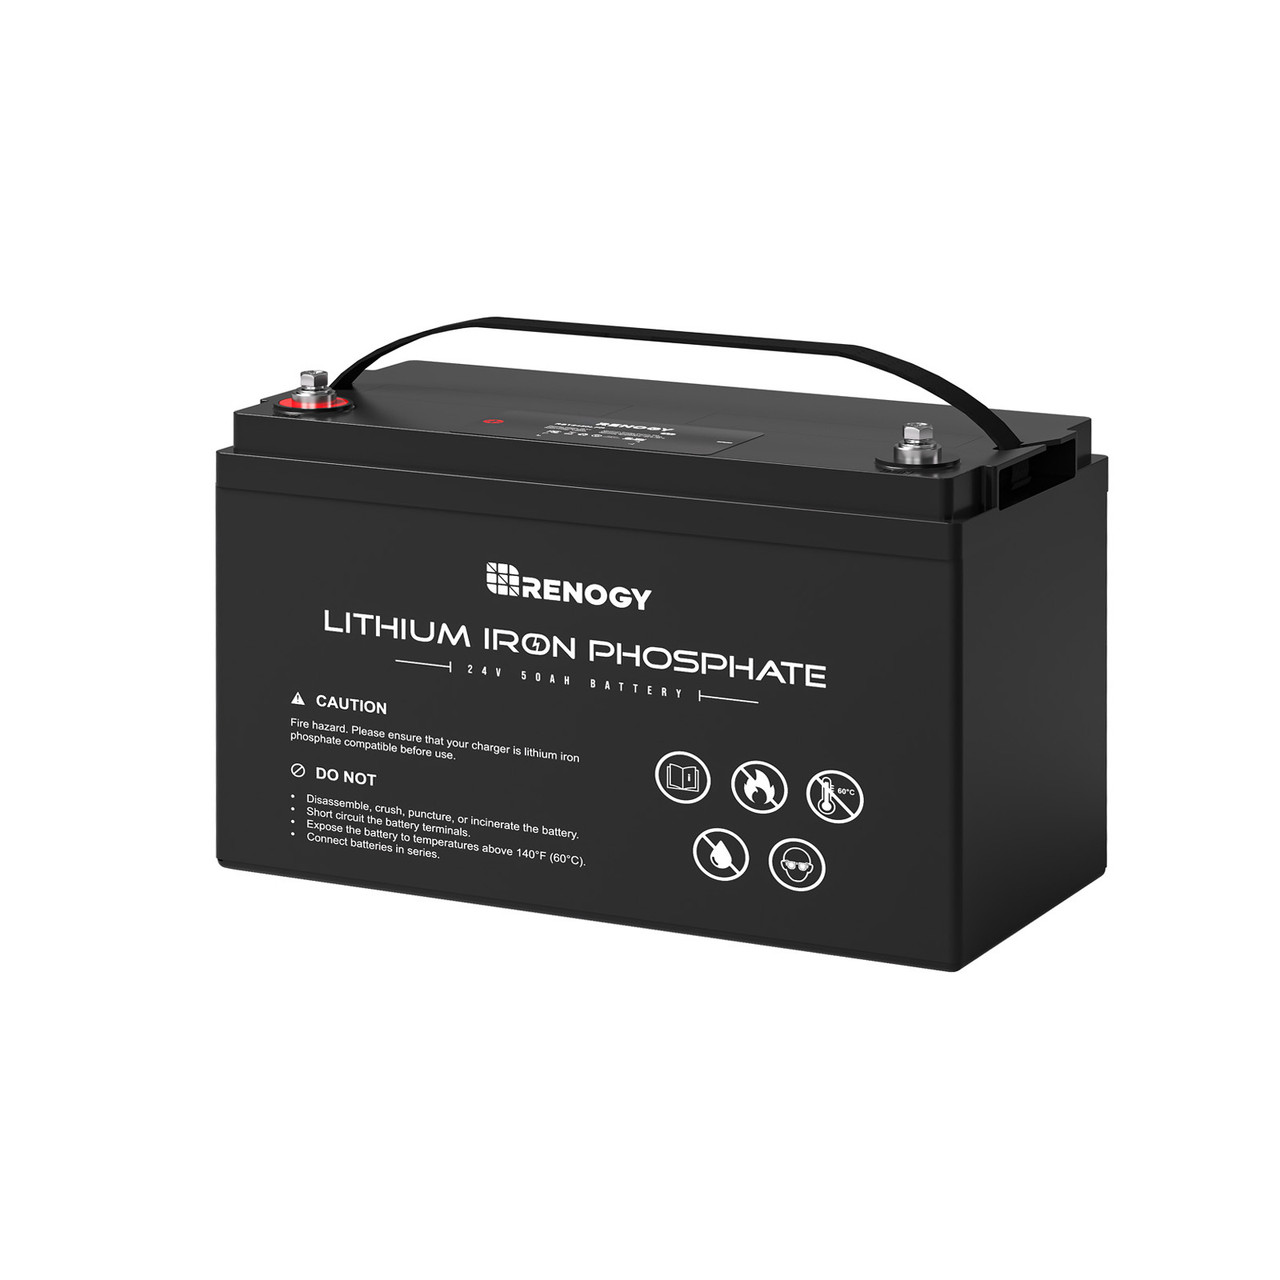 24V 50Ah Lithium Iron Phosphate Battery